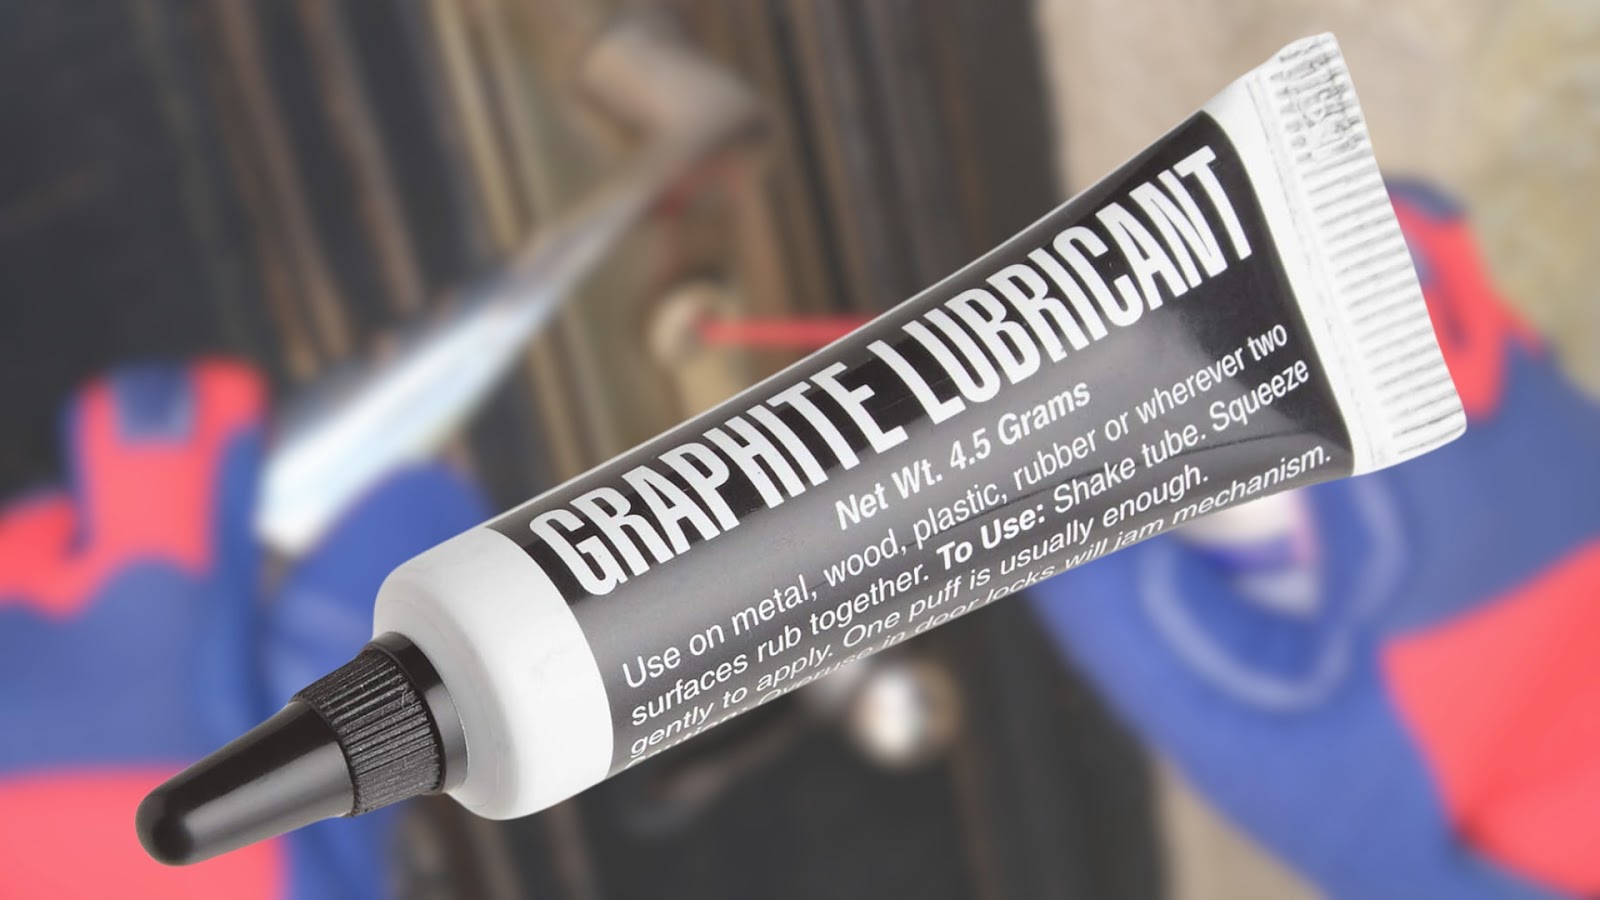 A graphite lubricant for locks